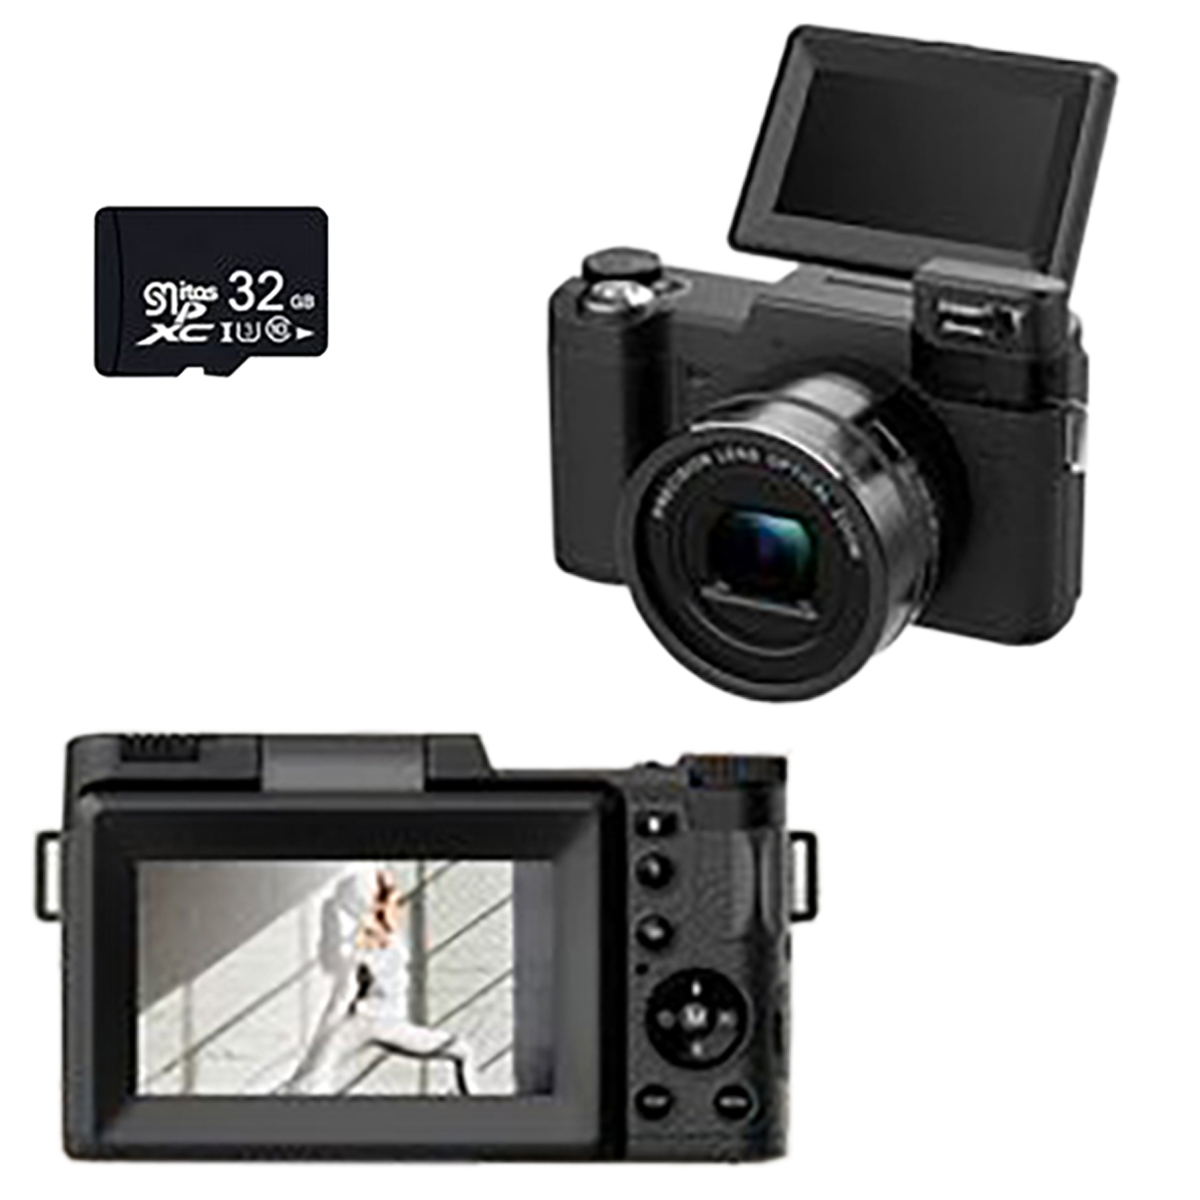 opt. mit Zoom- Mikro-SLR opt. Sony Zoom Kompaktkamera LINGDA 5x CMOS-Sensor, Schwarz, Digitalkamera